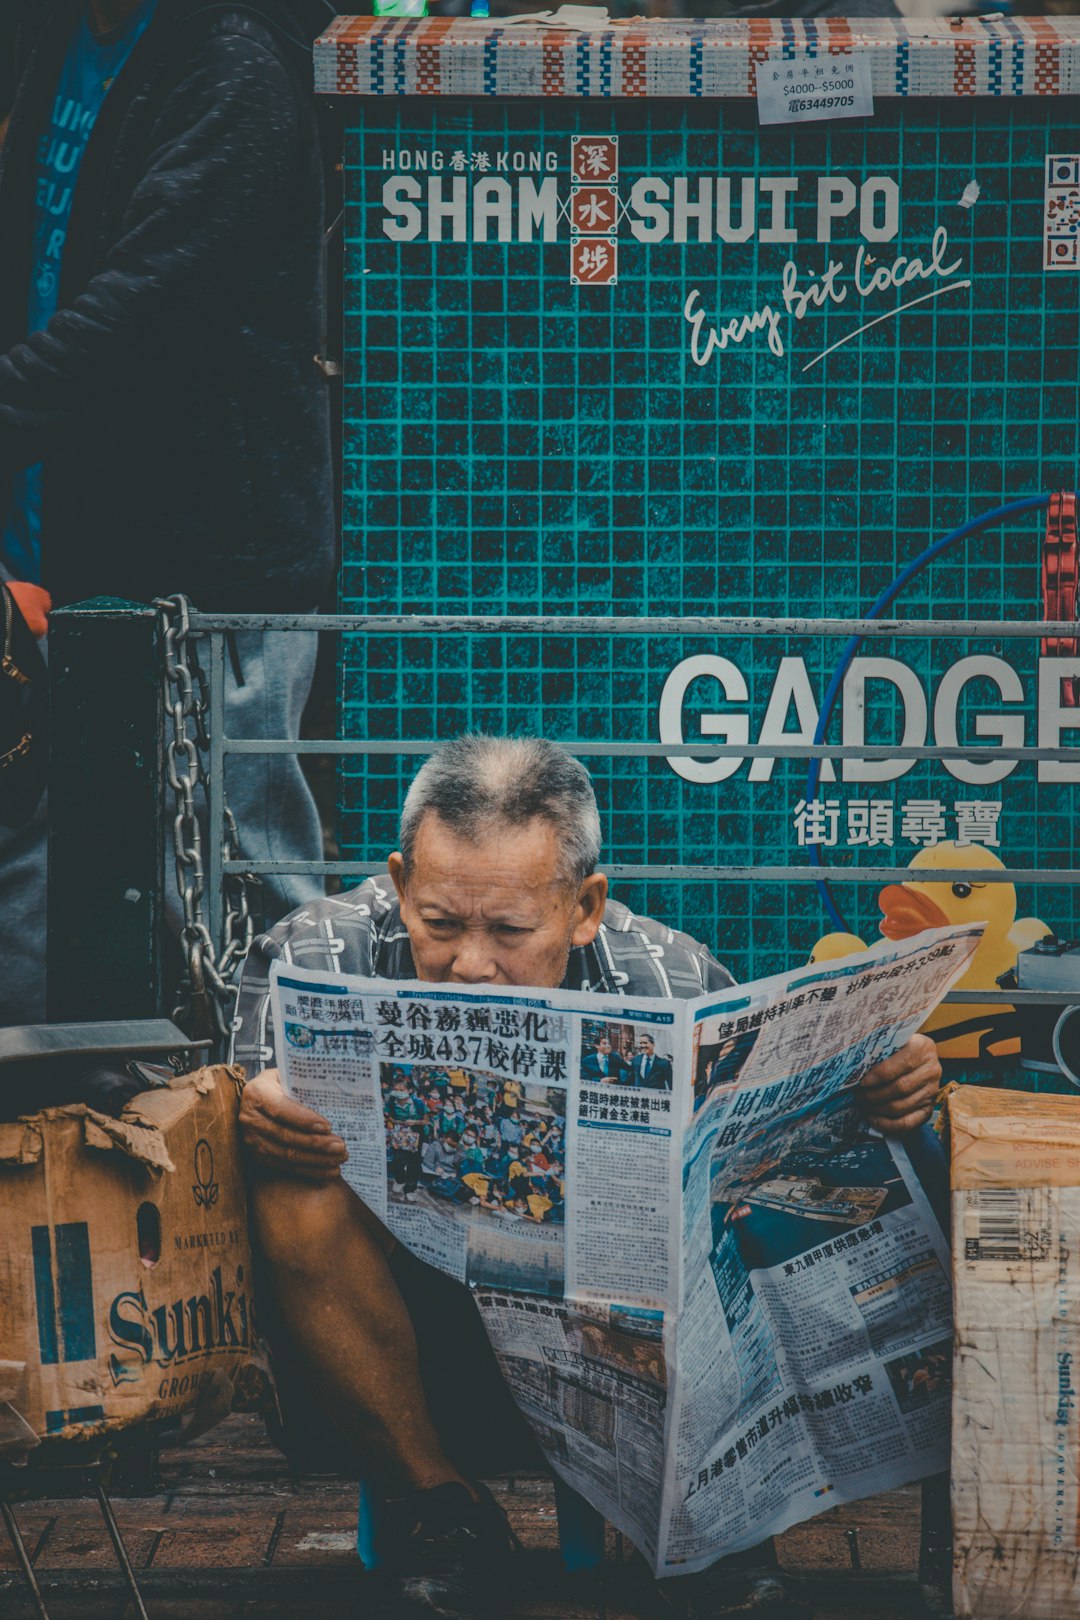 man reading newspaper